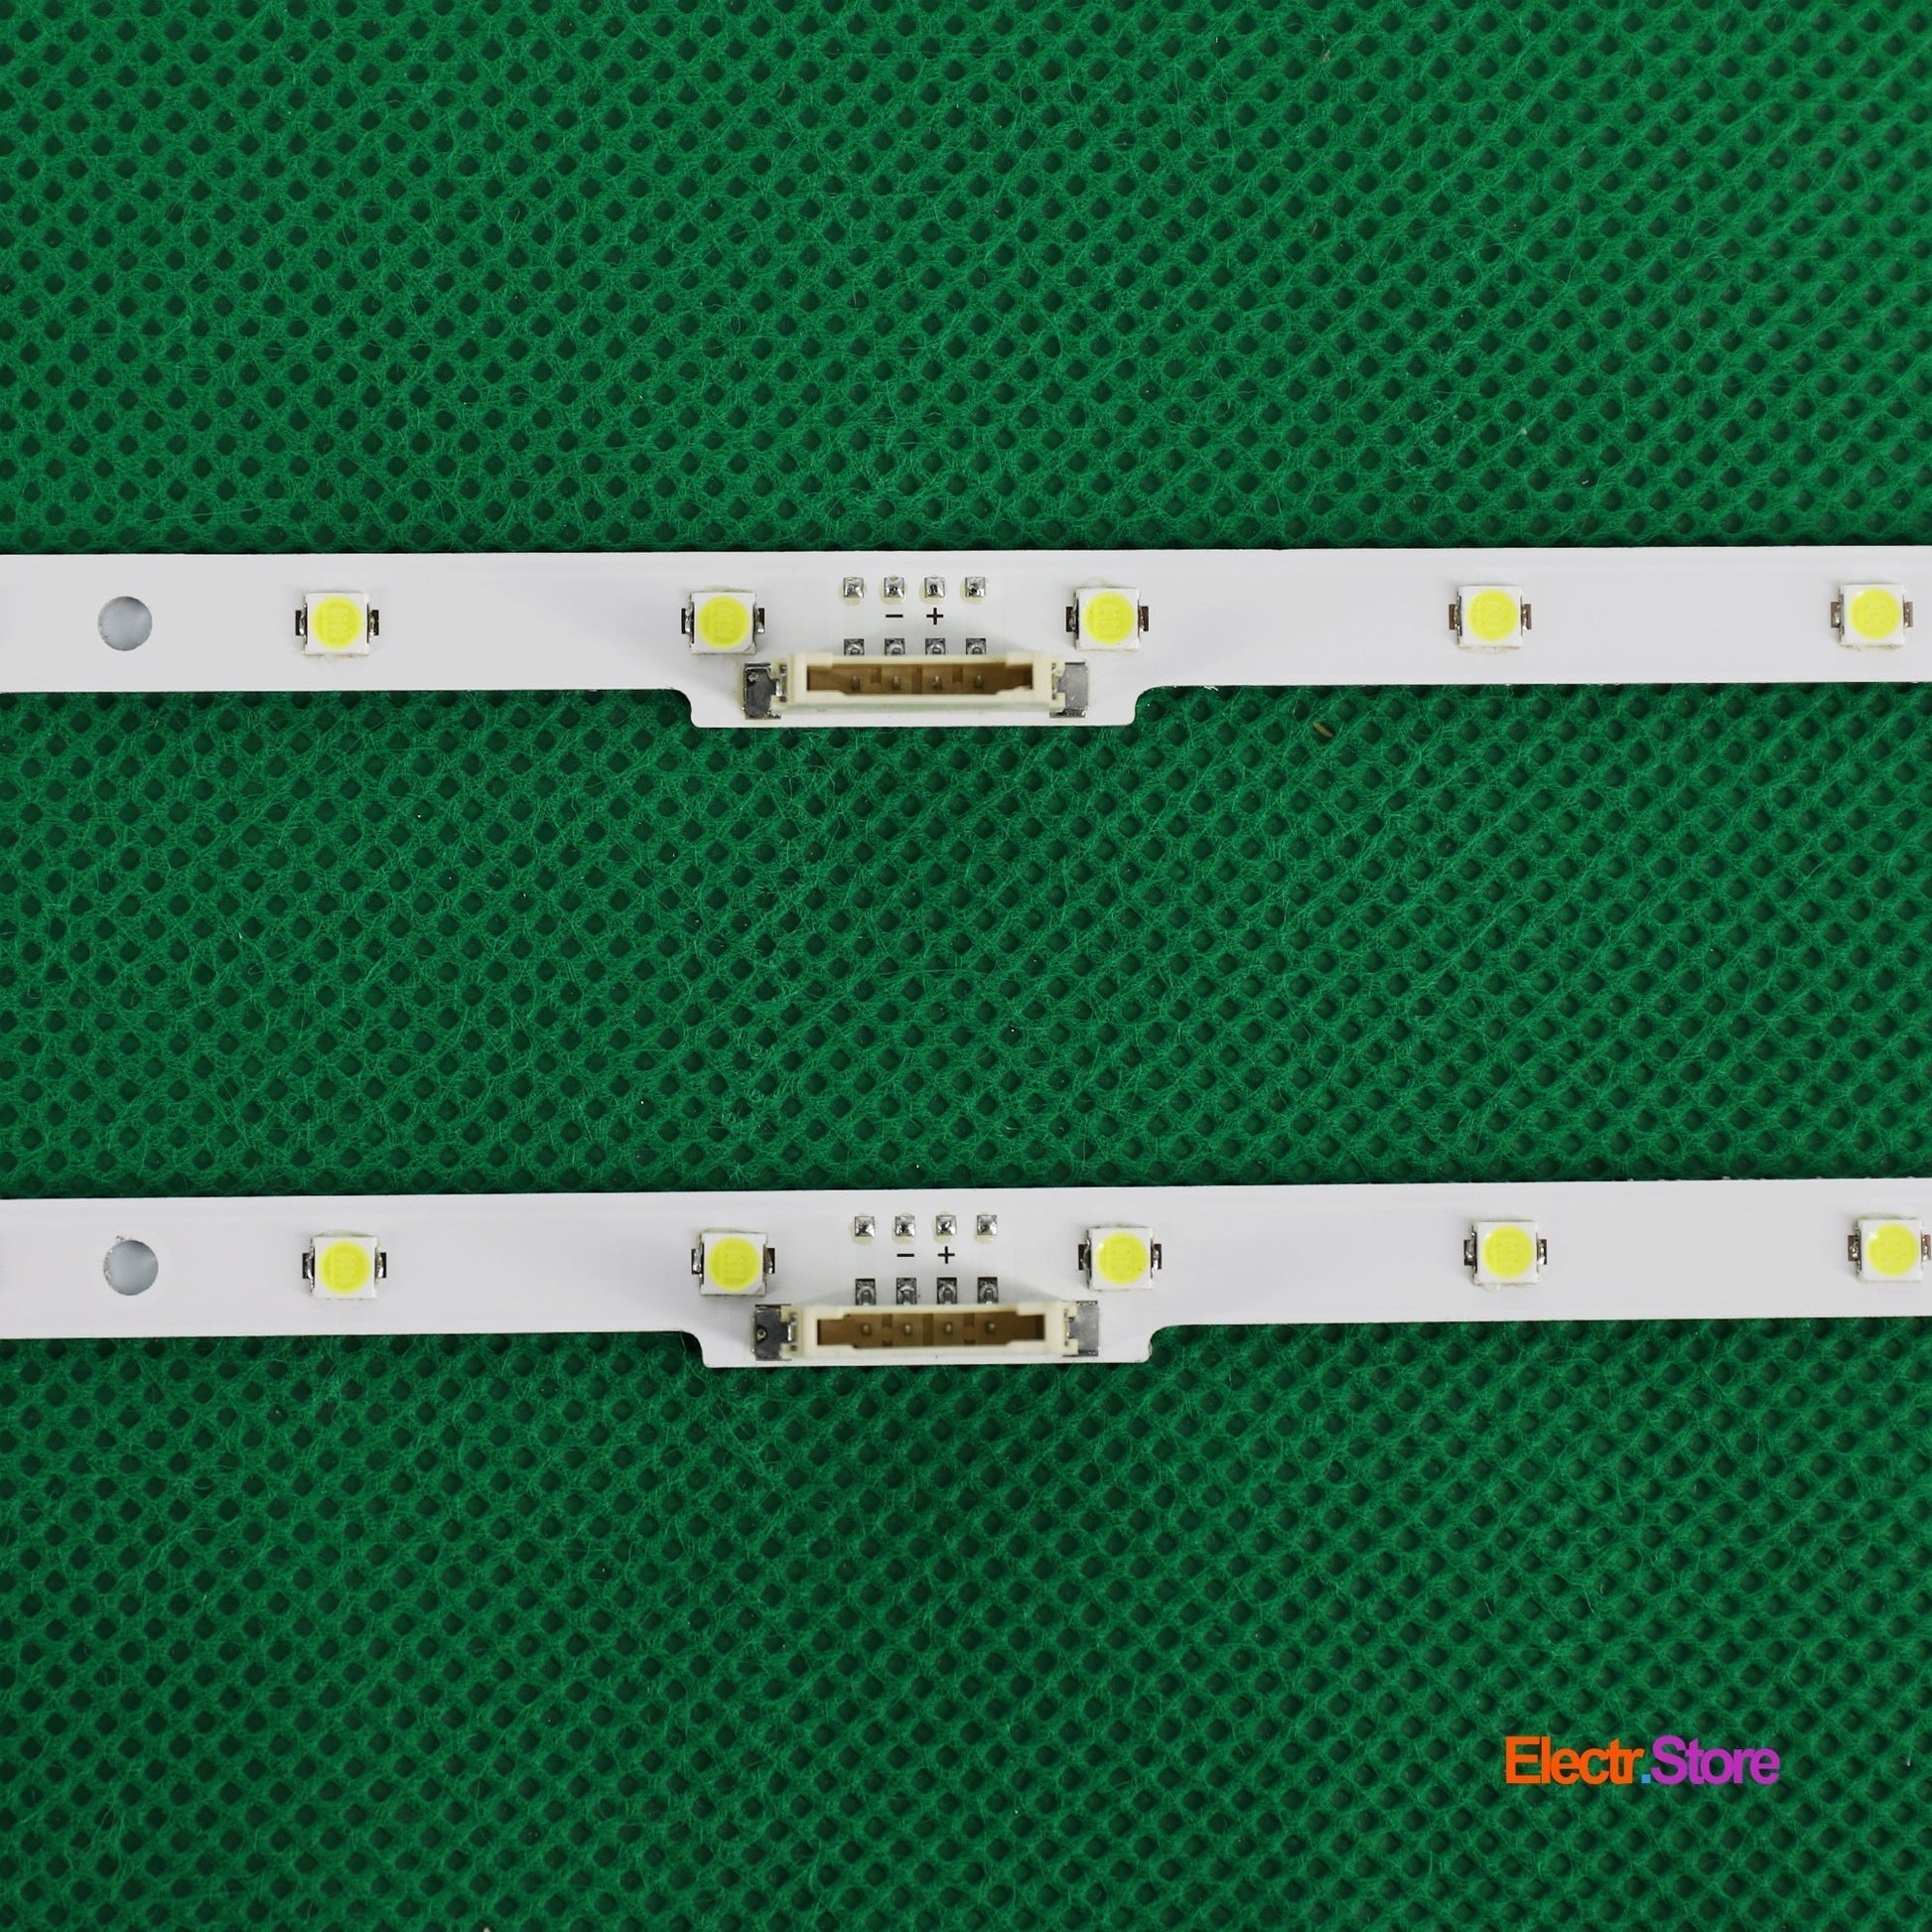 LED Backlight Strip Kits, AOT_40_NU7100F, LM41-00550A, LM41-00549A, BN96-45955A, 2X23LED (2 pcs/kit), for TV 40" SAMSUNG: UE40NU7125KXXC, UE40NU7140UXRU, UE40NU7170UXRU, UE40NU7180SXXN 40" LED Backlights LM41-00550A Samsung Electr.Store